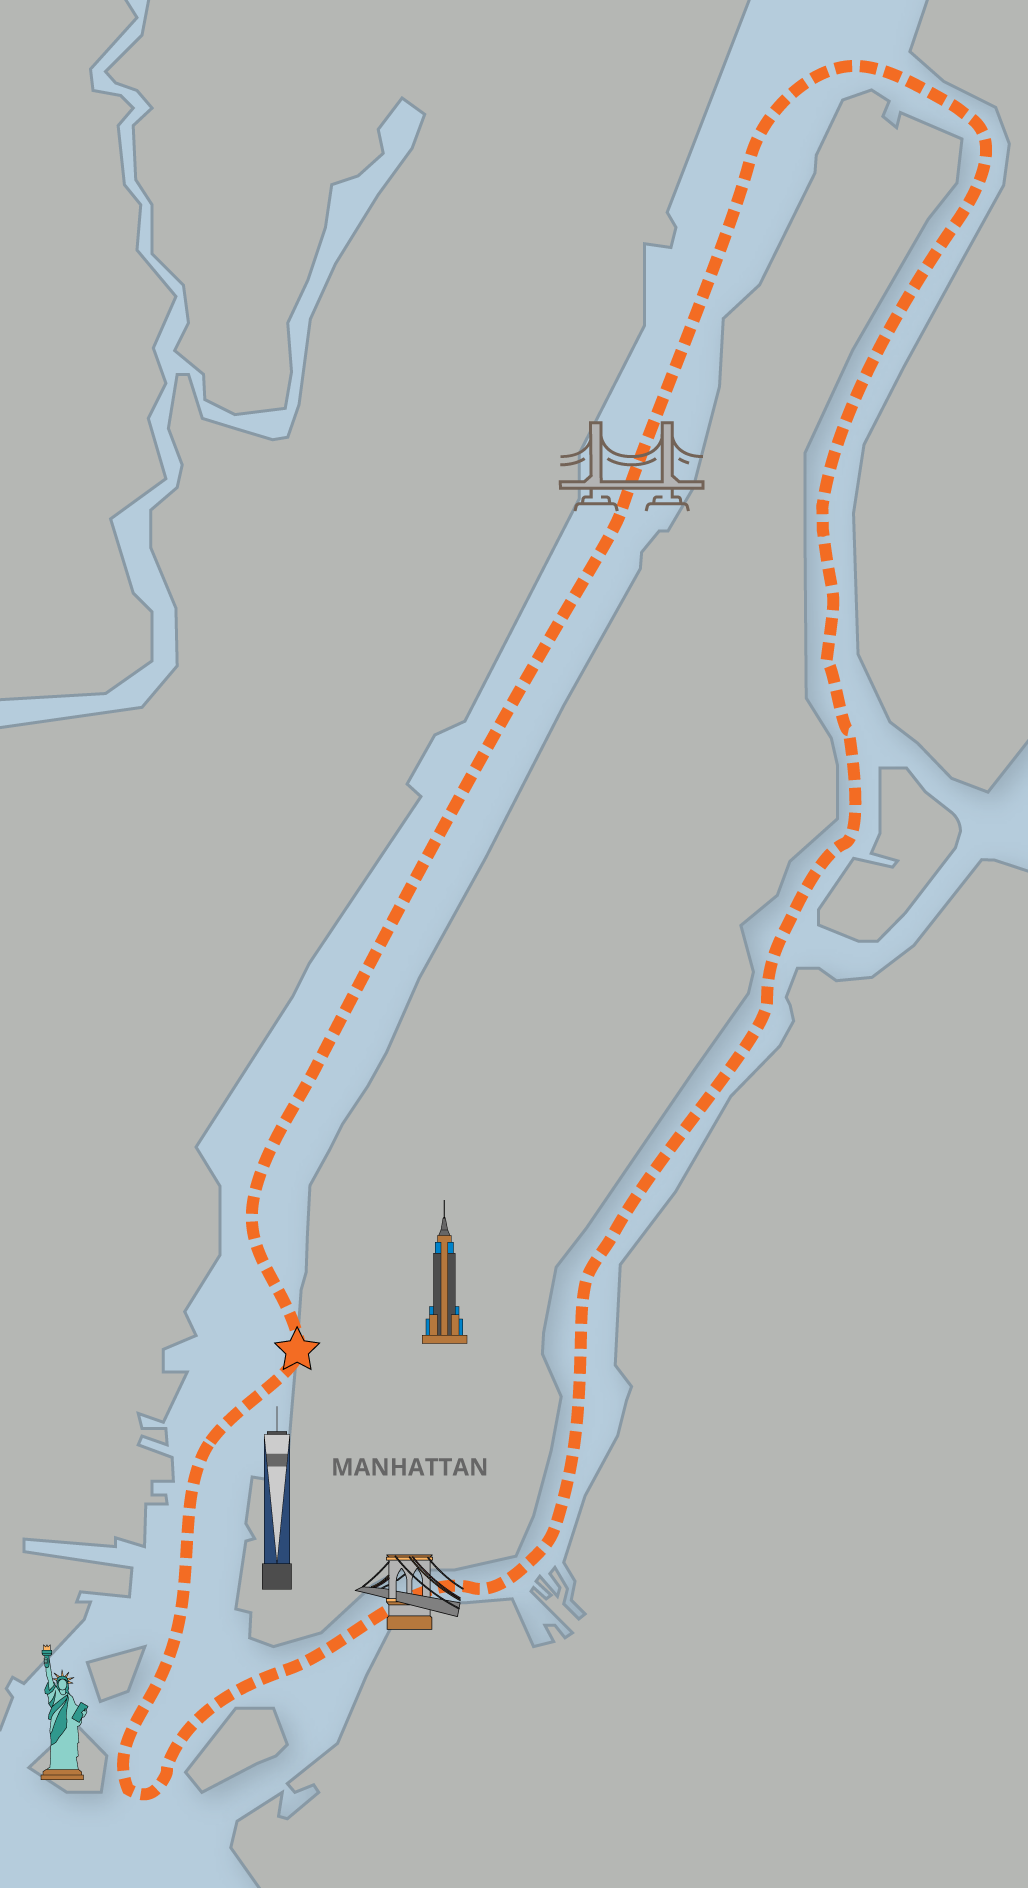 route map of the cruise ride through manhattan